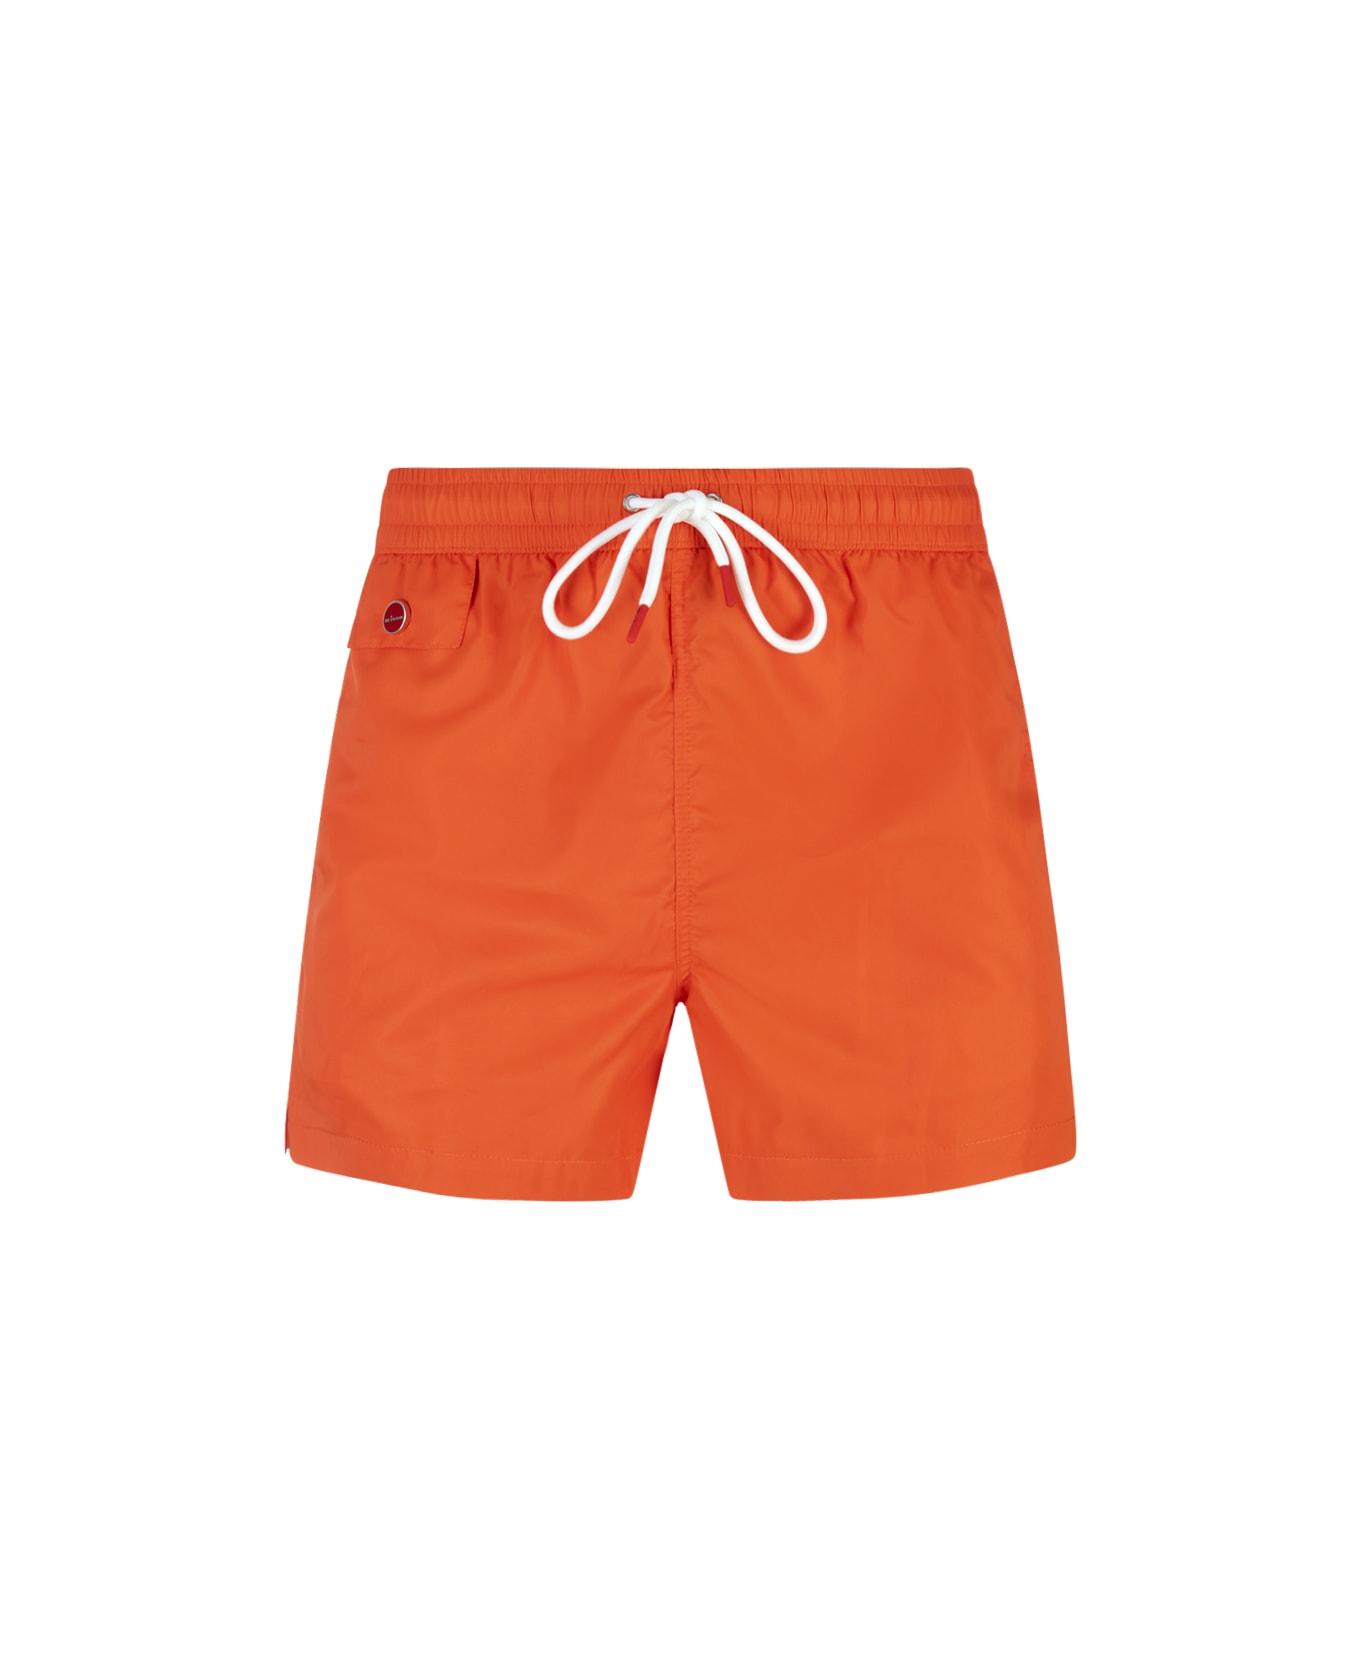 Kiton Orange Swim Shorts - Orange